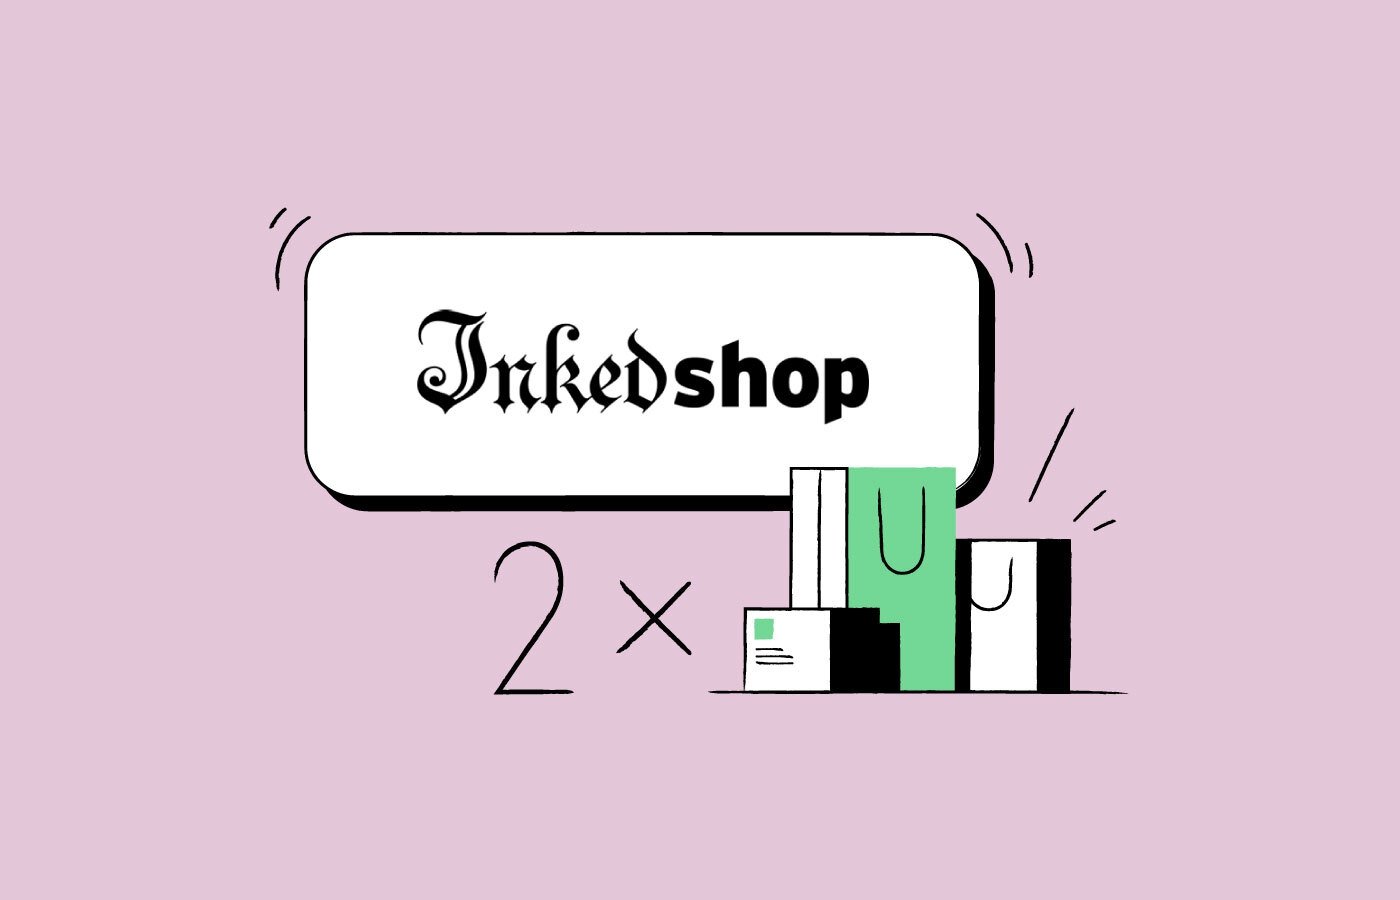 Inkedshop success story with Firepush SMS and push marketing 